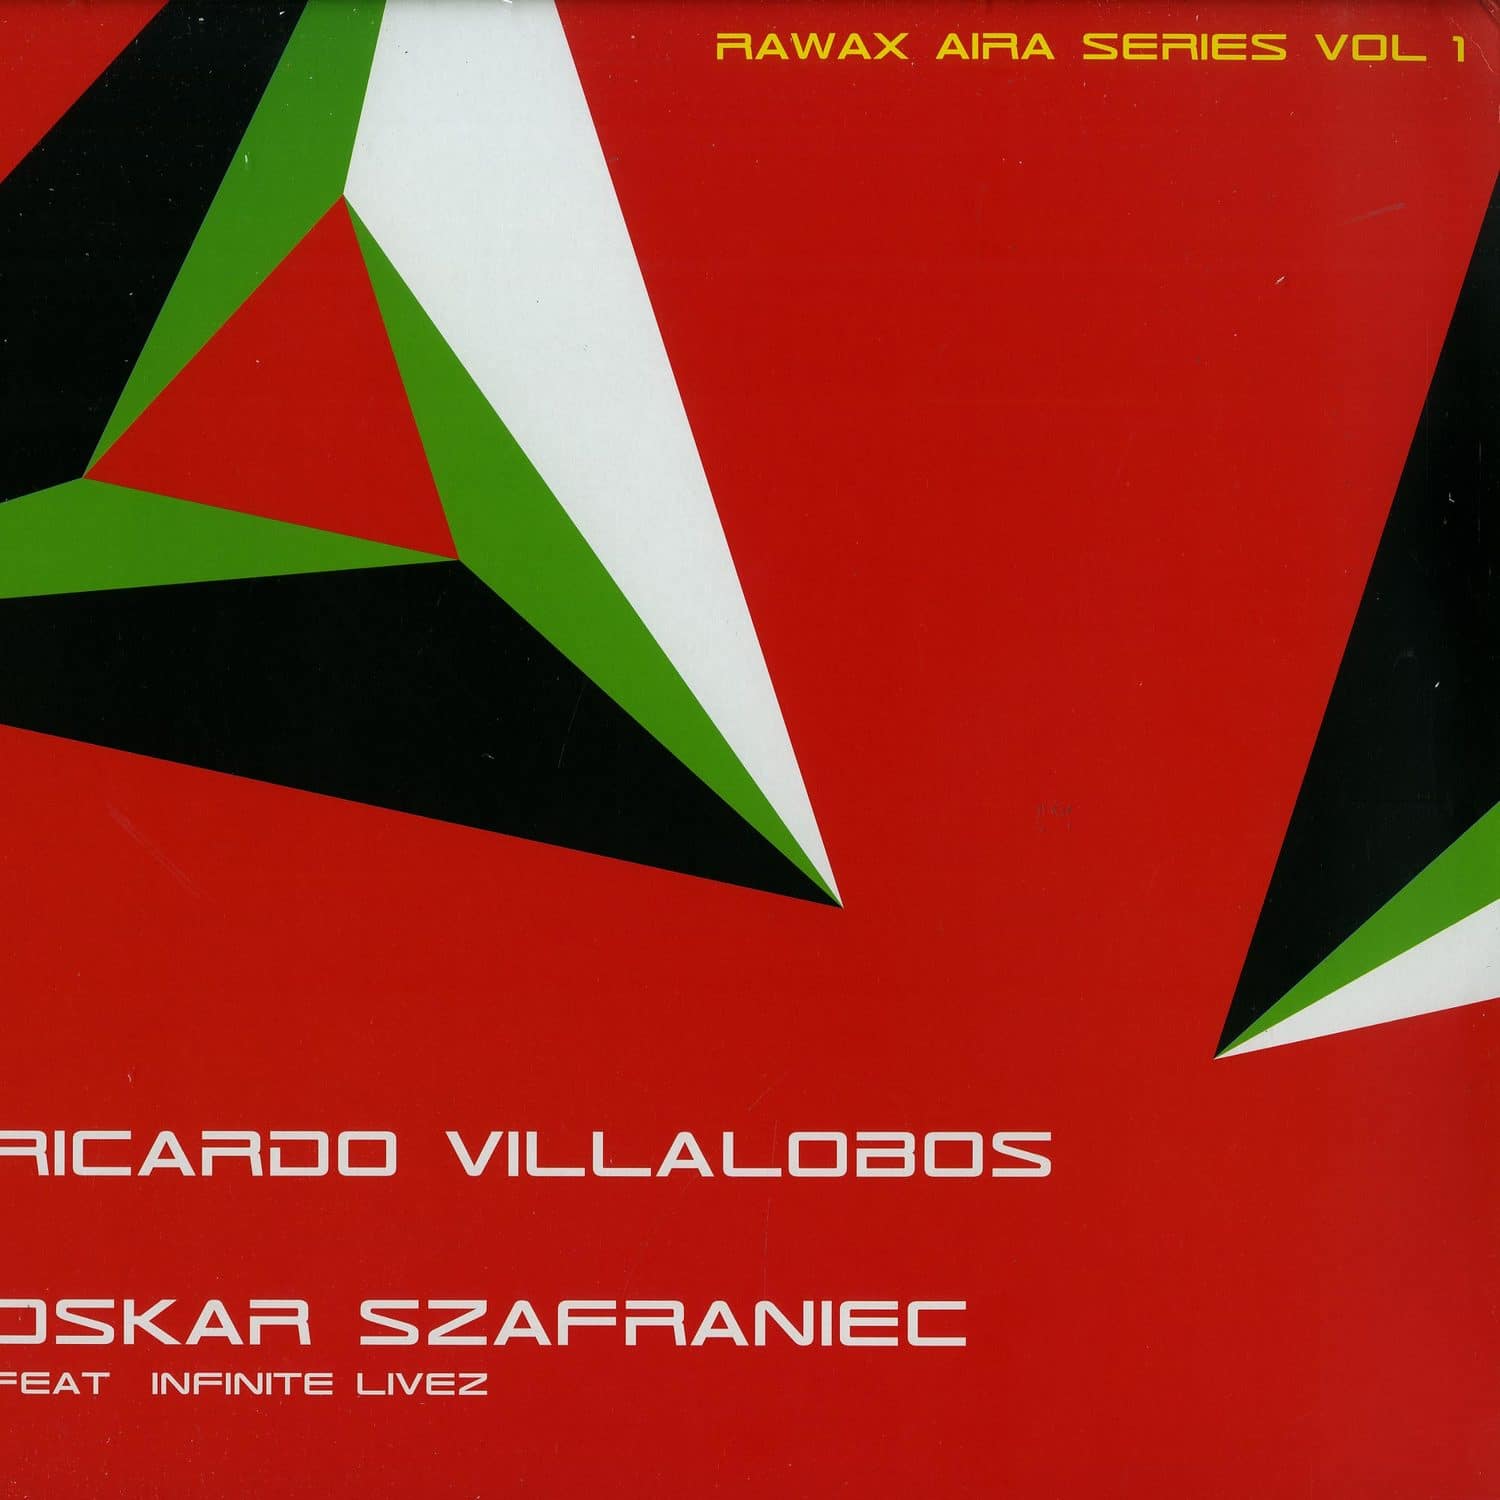 Ricardo Villalobos / Oskar Szafraniec feat. Infinite Livez - RAWAX AIRA SERIES VOL. 1 